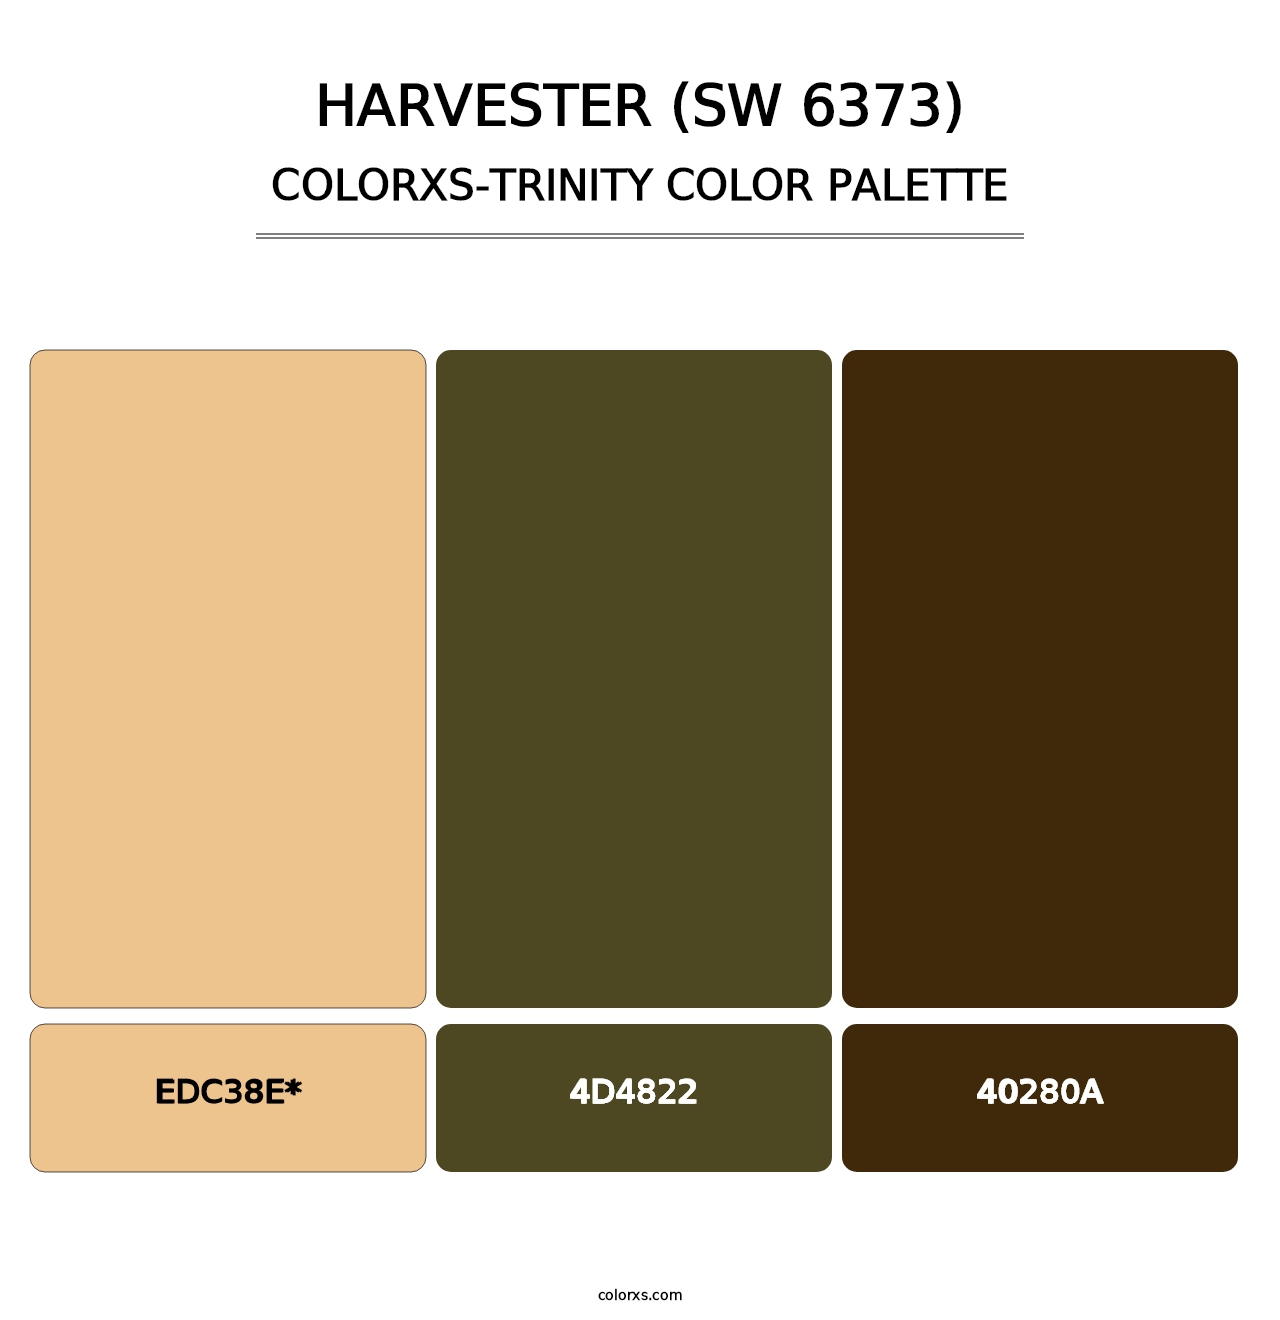 Harvester (SW 6373) - Colorxs Trinity Palette